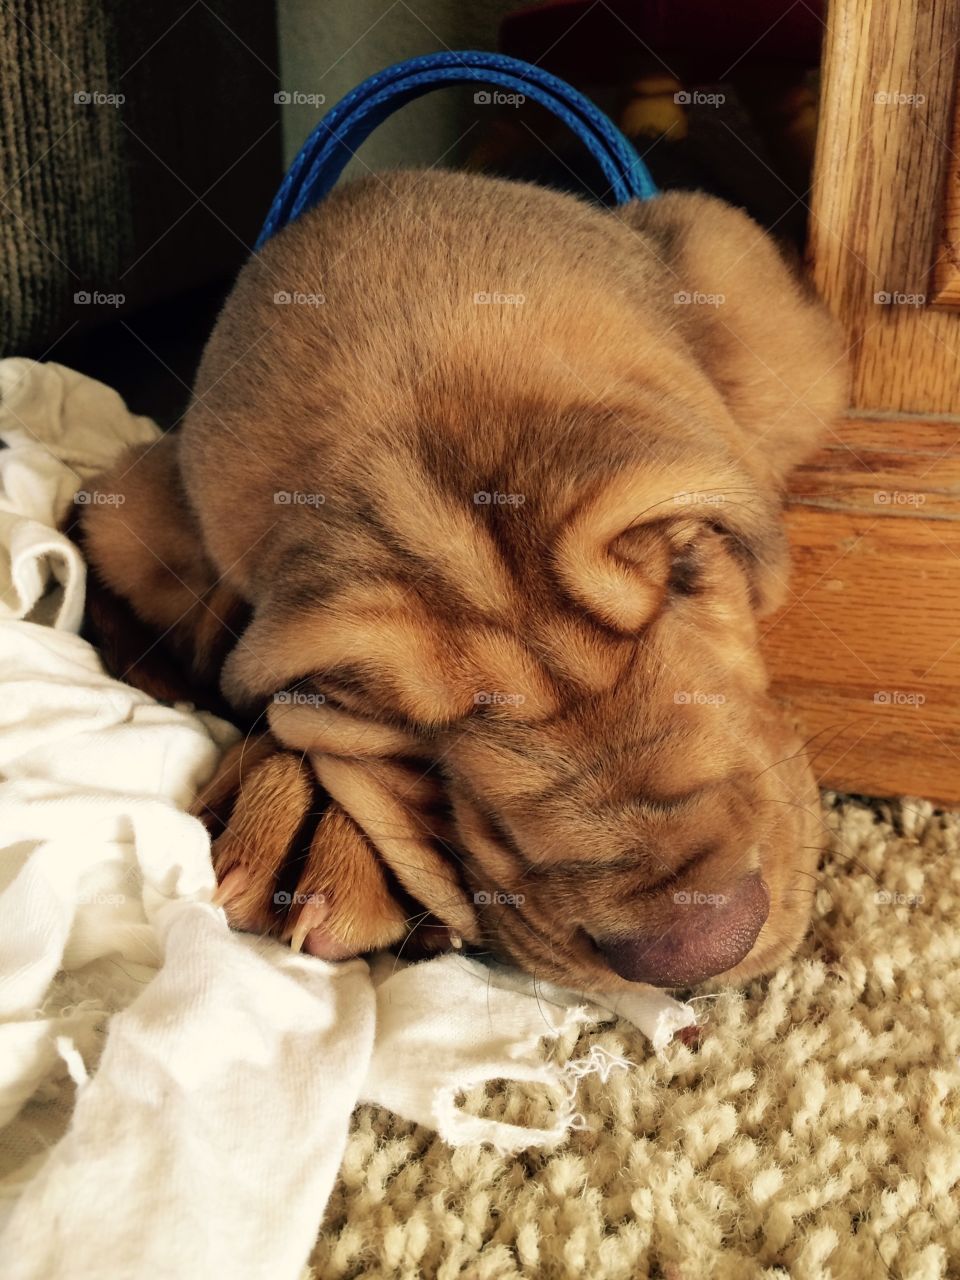 Ruff life. Sleeping bloodhound puppy